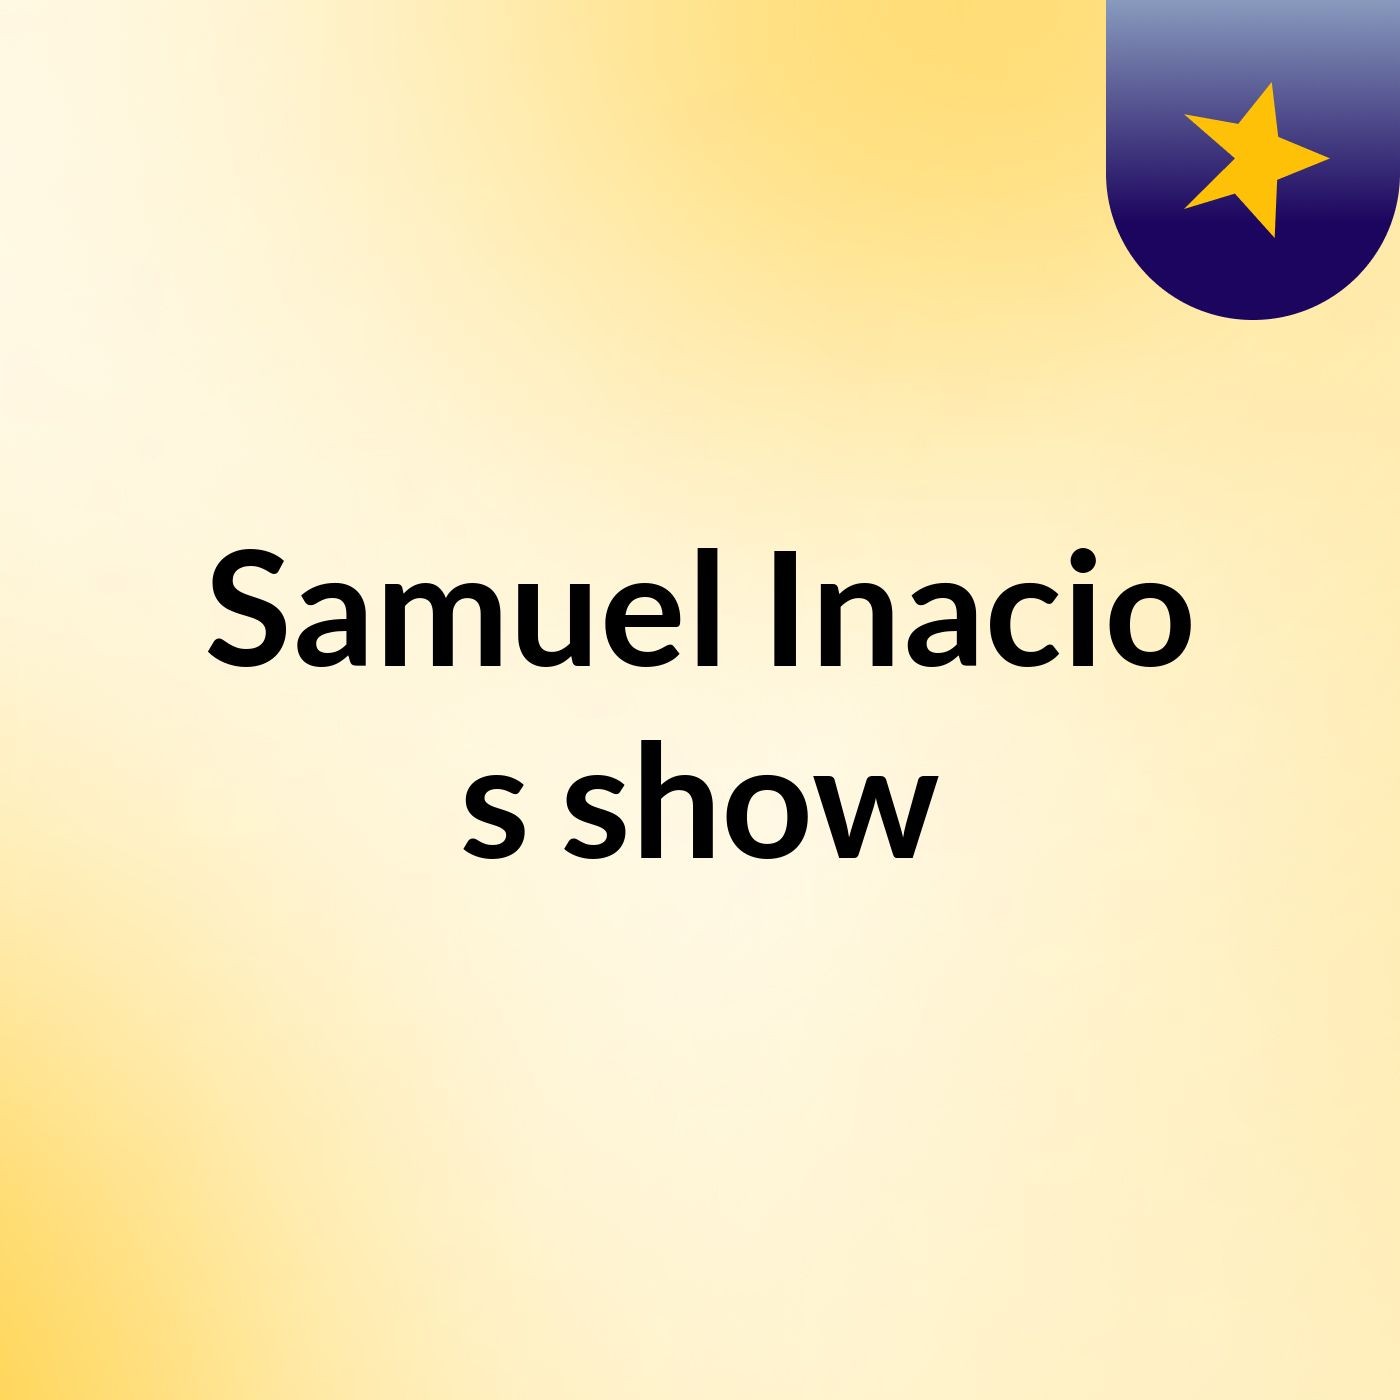 Samuel Inacio's show